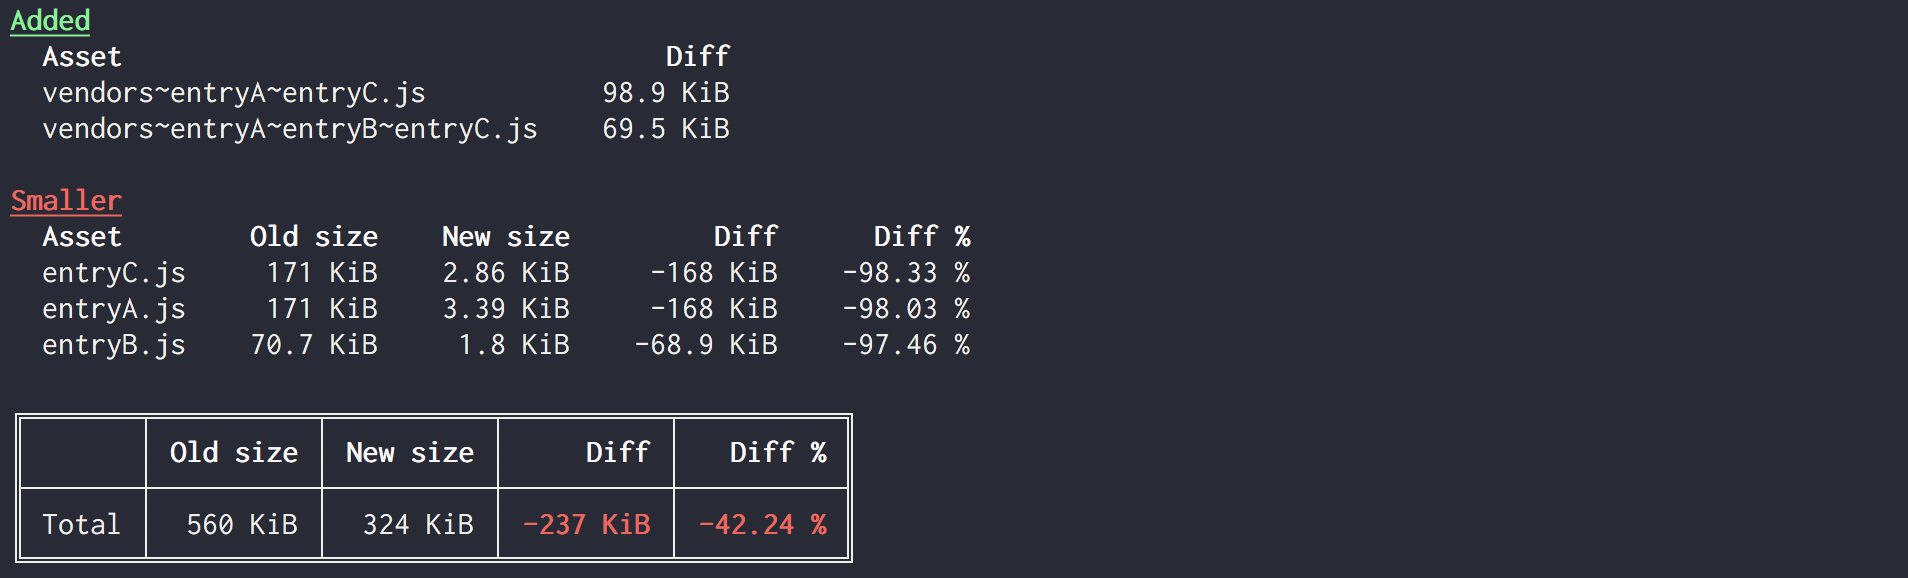 webpack-stats-diff-plugin comparison output